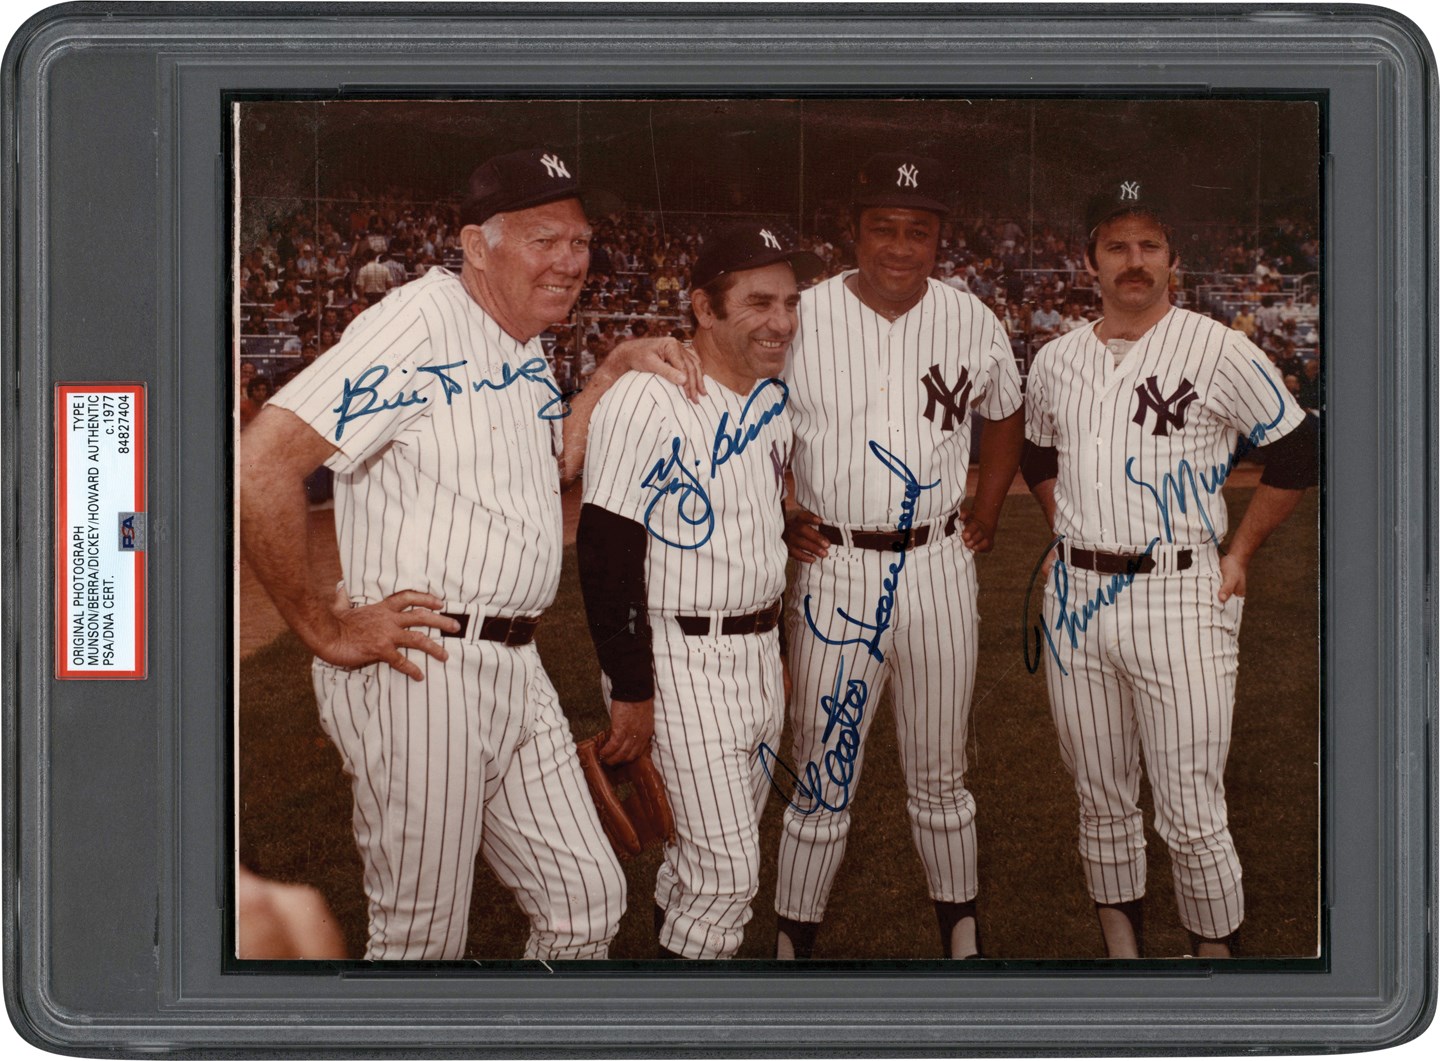 Baseball Autographs - Amazing Photo Signed by the Four Greatest Yankee Catchers (PSA Type I w/ Authentic Sigs)